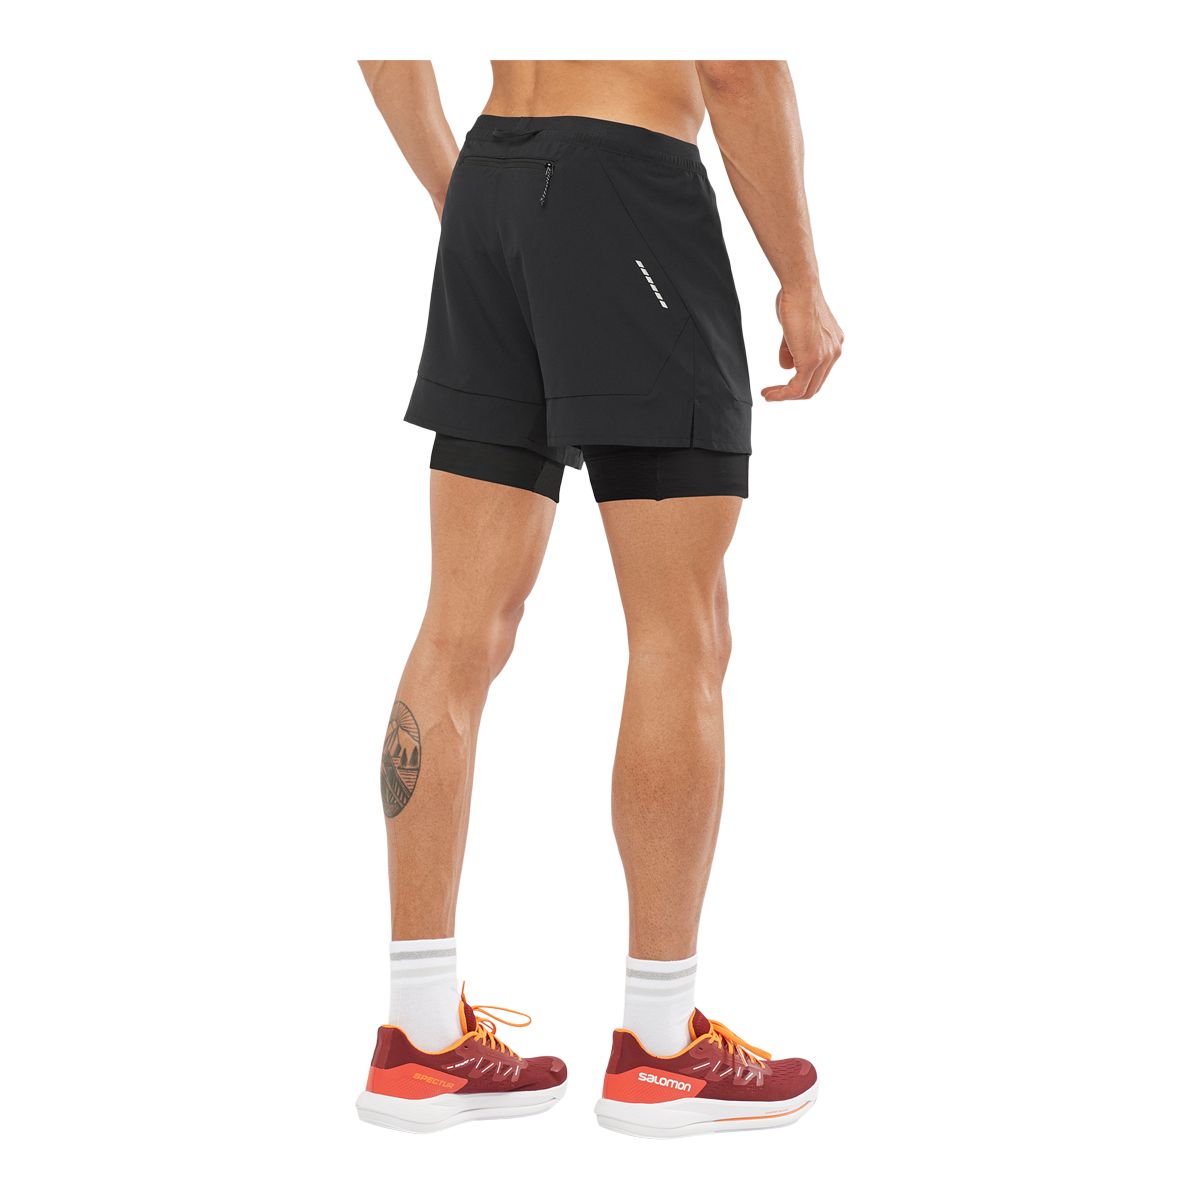 Salomon Men's Cross 2-in-1 Running Shorts, Slim Fit Quick-Dry